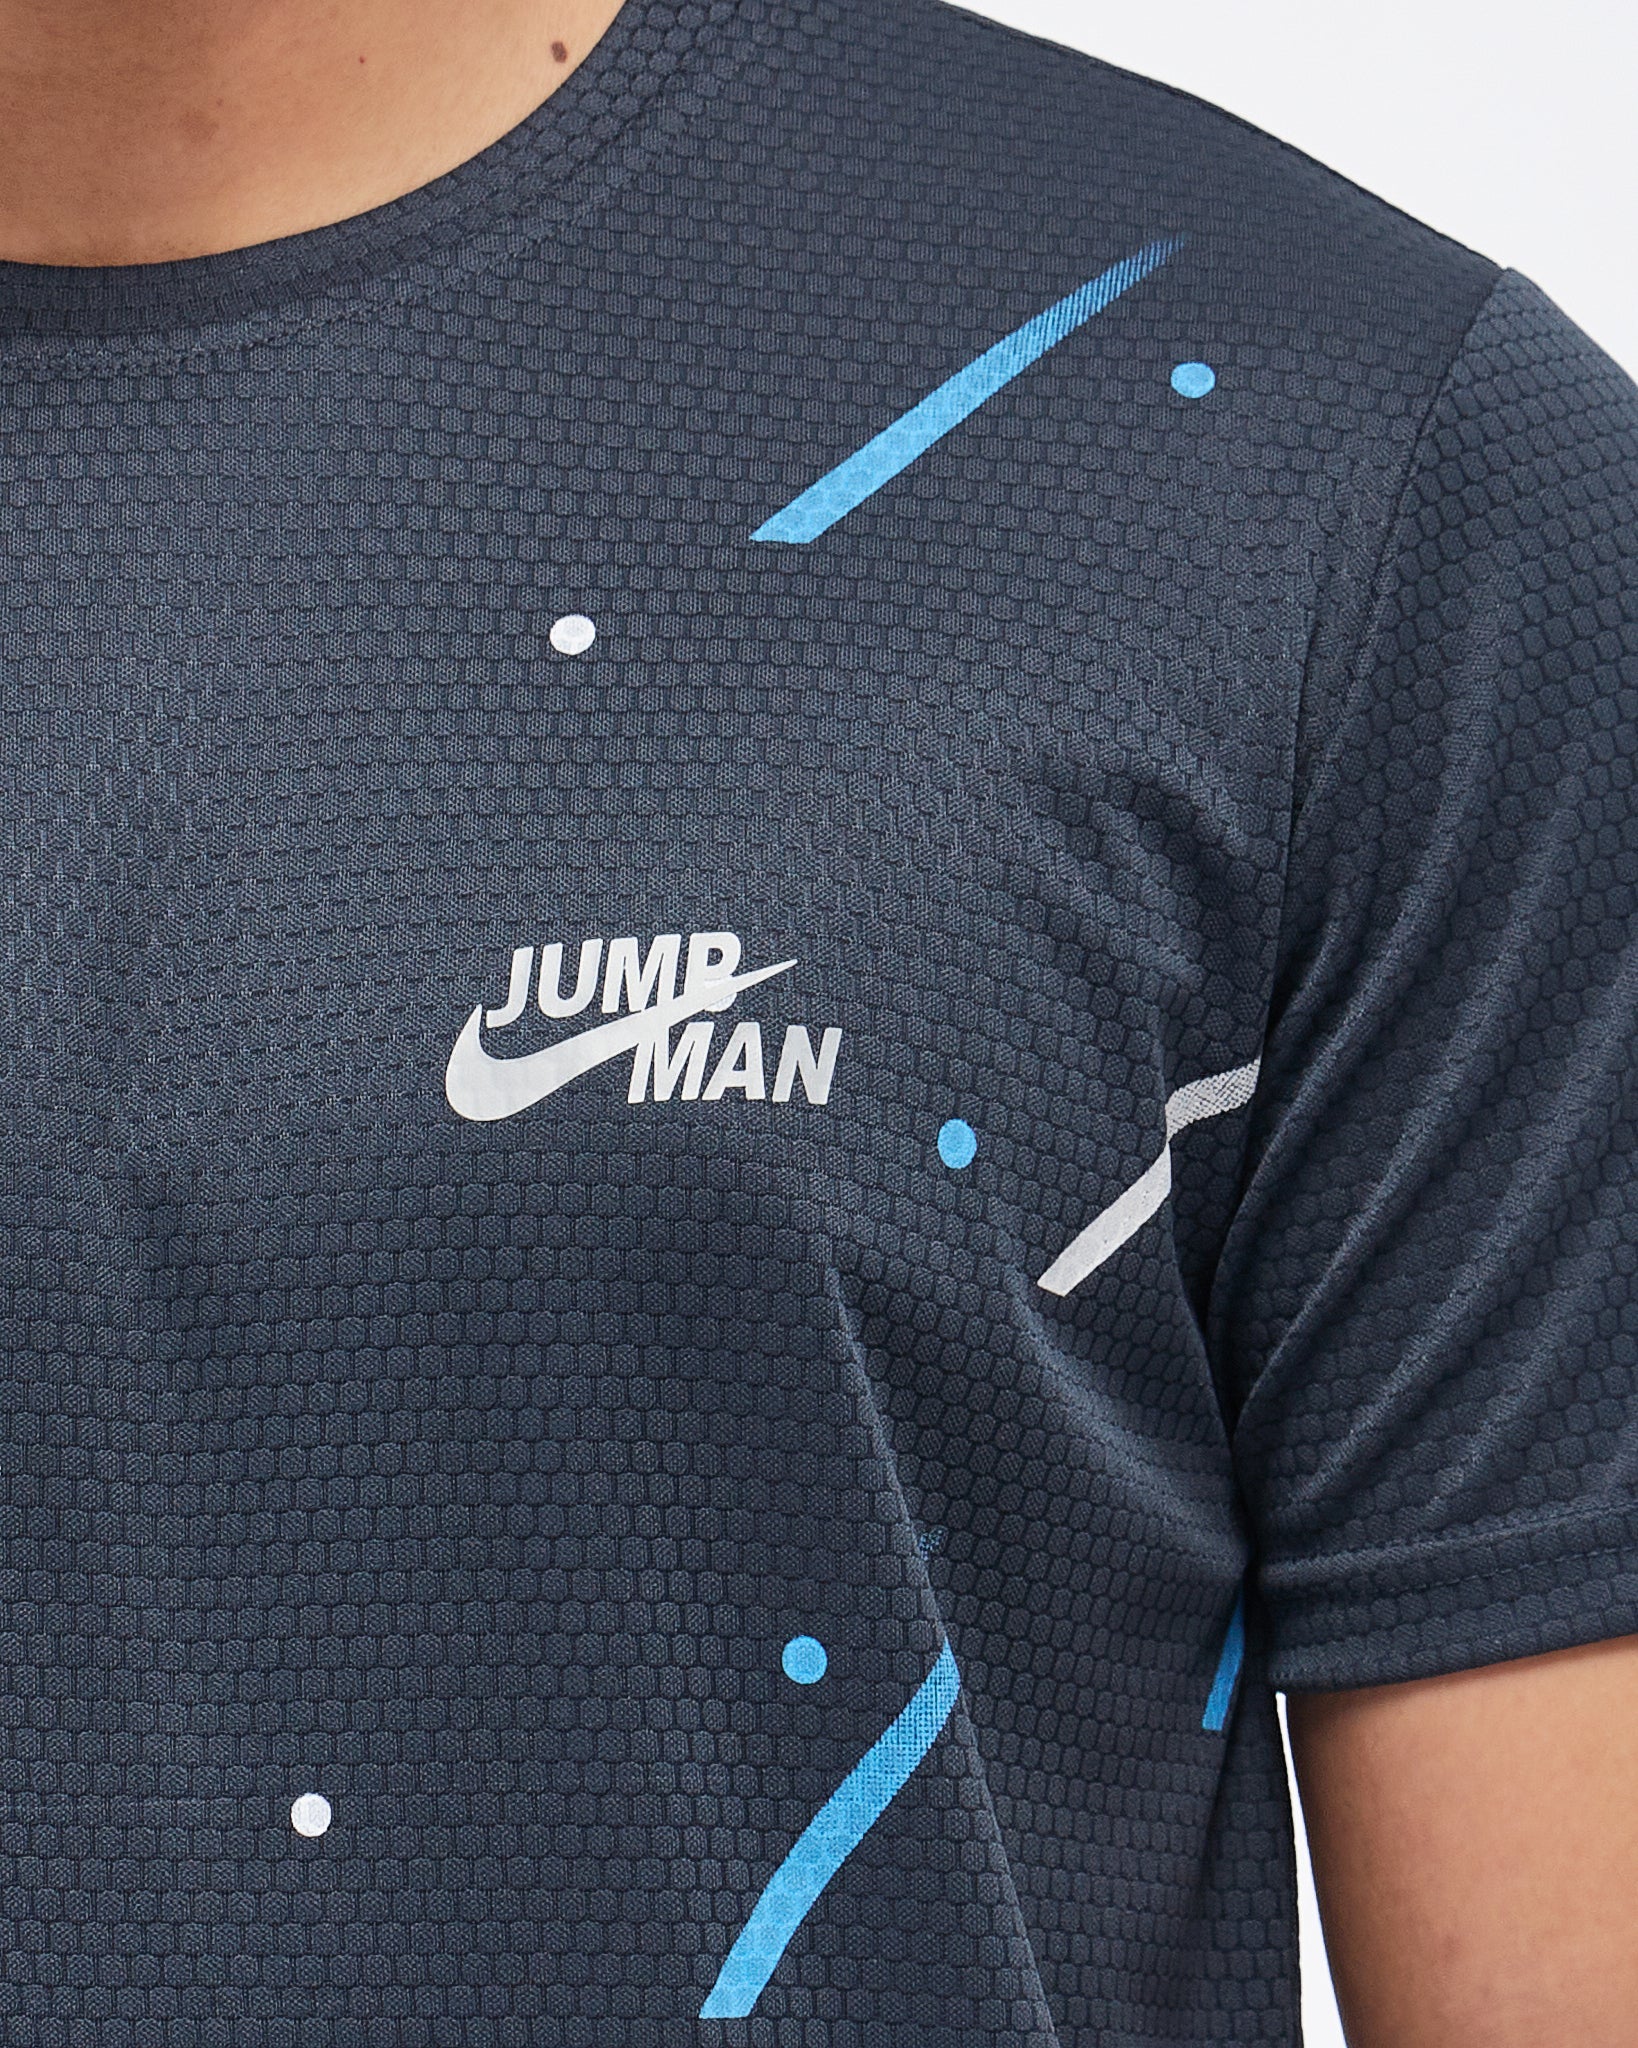 MOI OUTFIT-Jumpman Printed Men T-Shirt 13.50